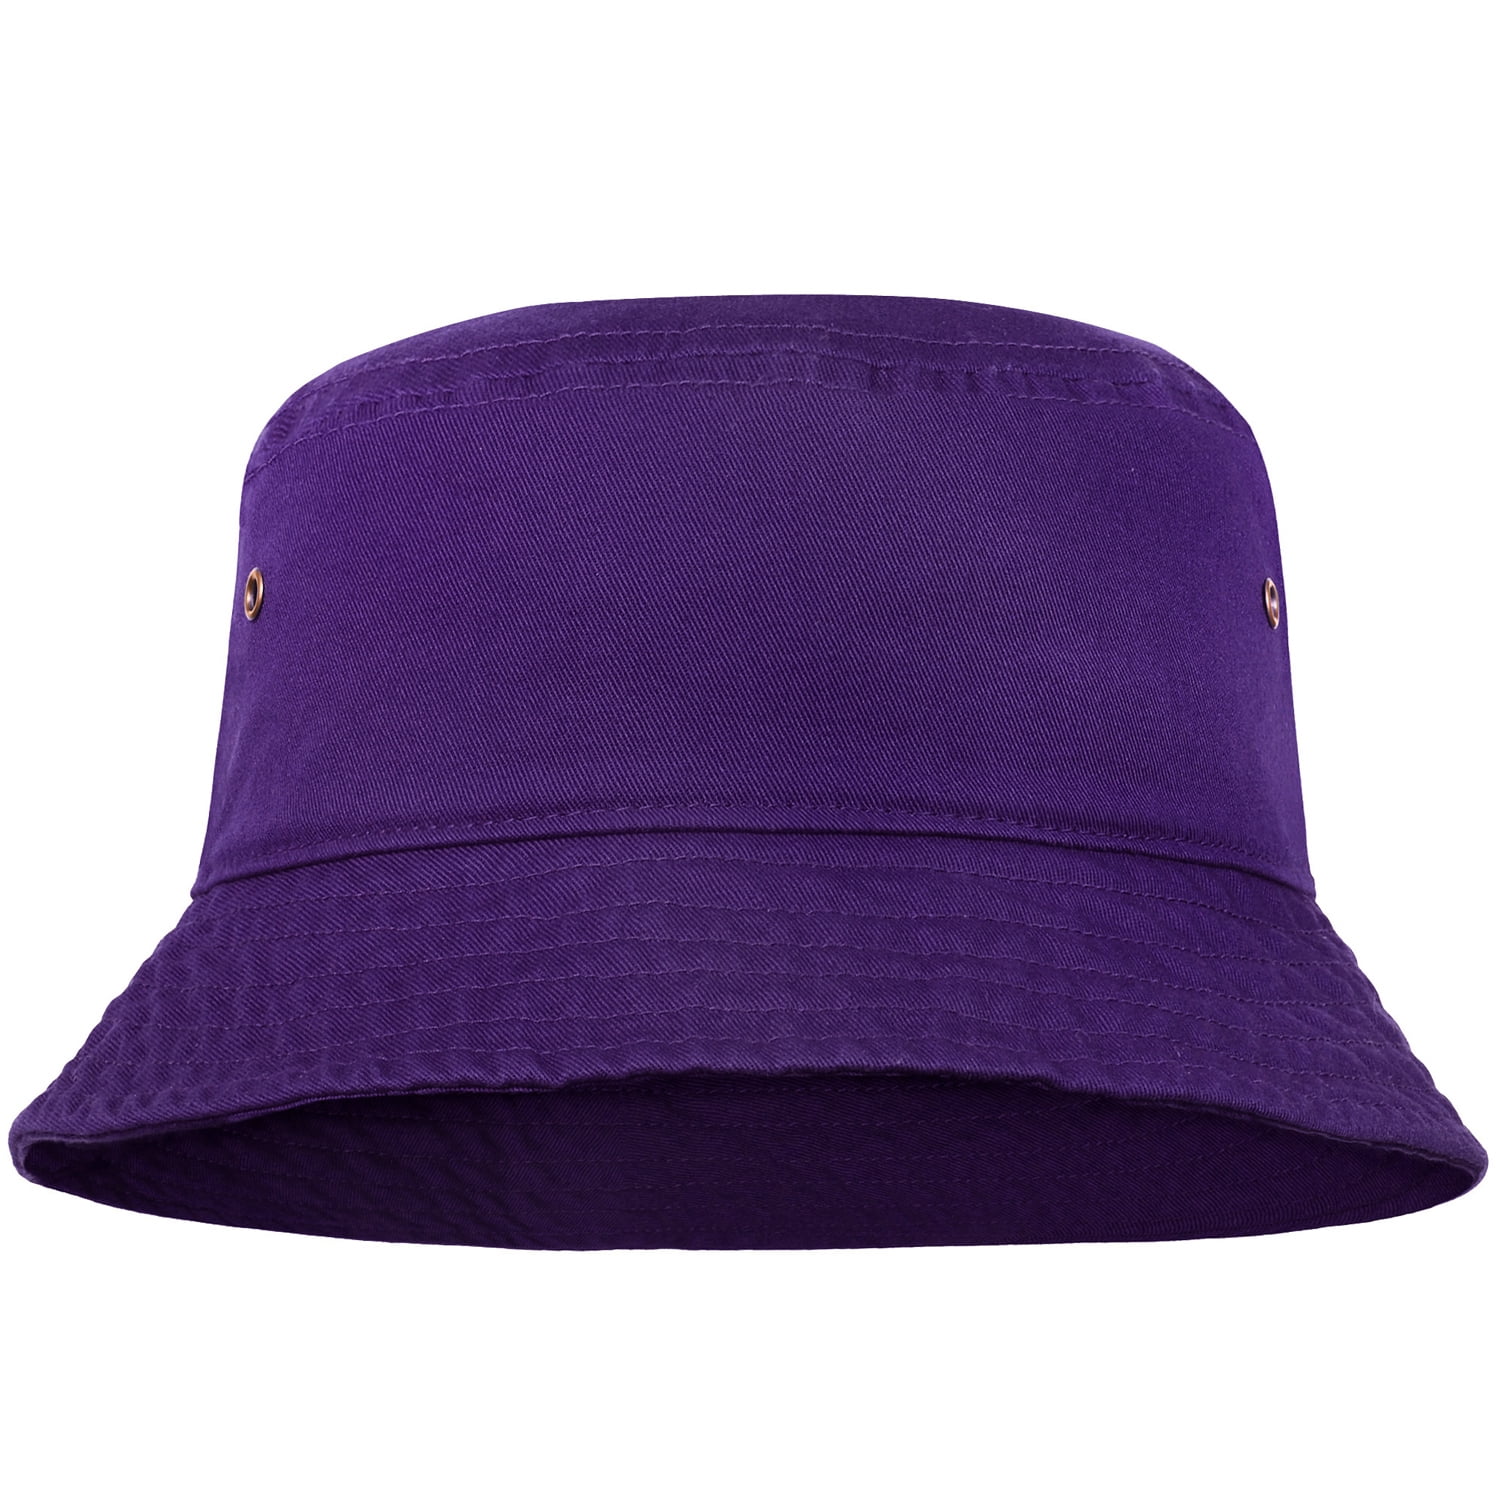 Bucket Hat for Men Women Unisex 100% Cotton Packable Kosovo